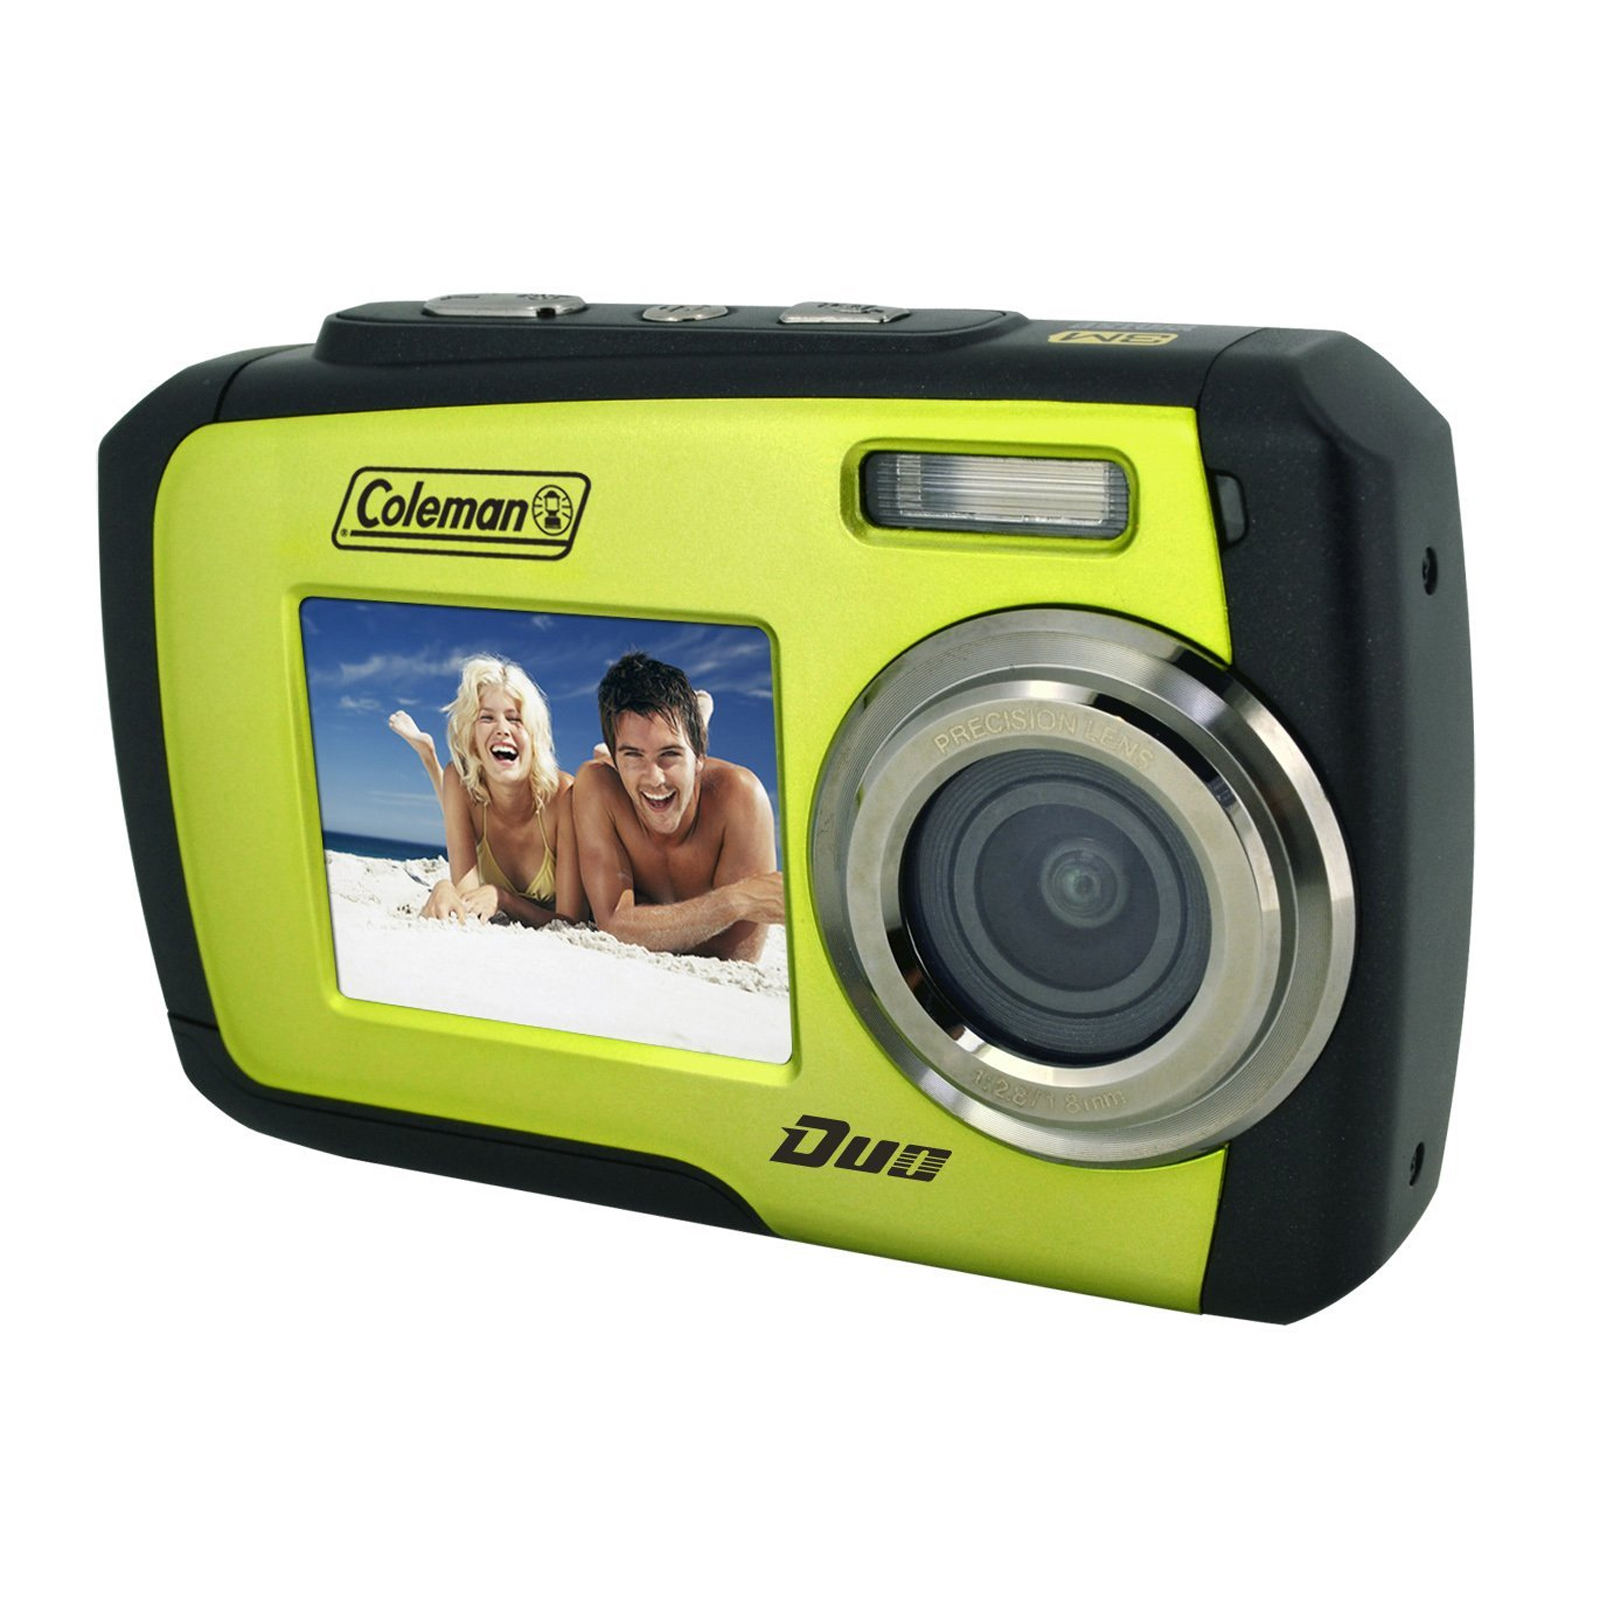 Duo 14 Megapixel Waterproof Digital Camera with Dual LCD Screen (Green)